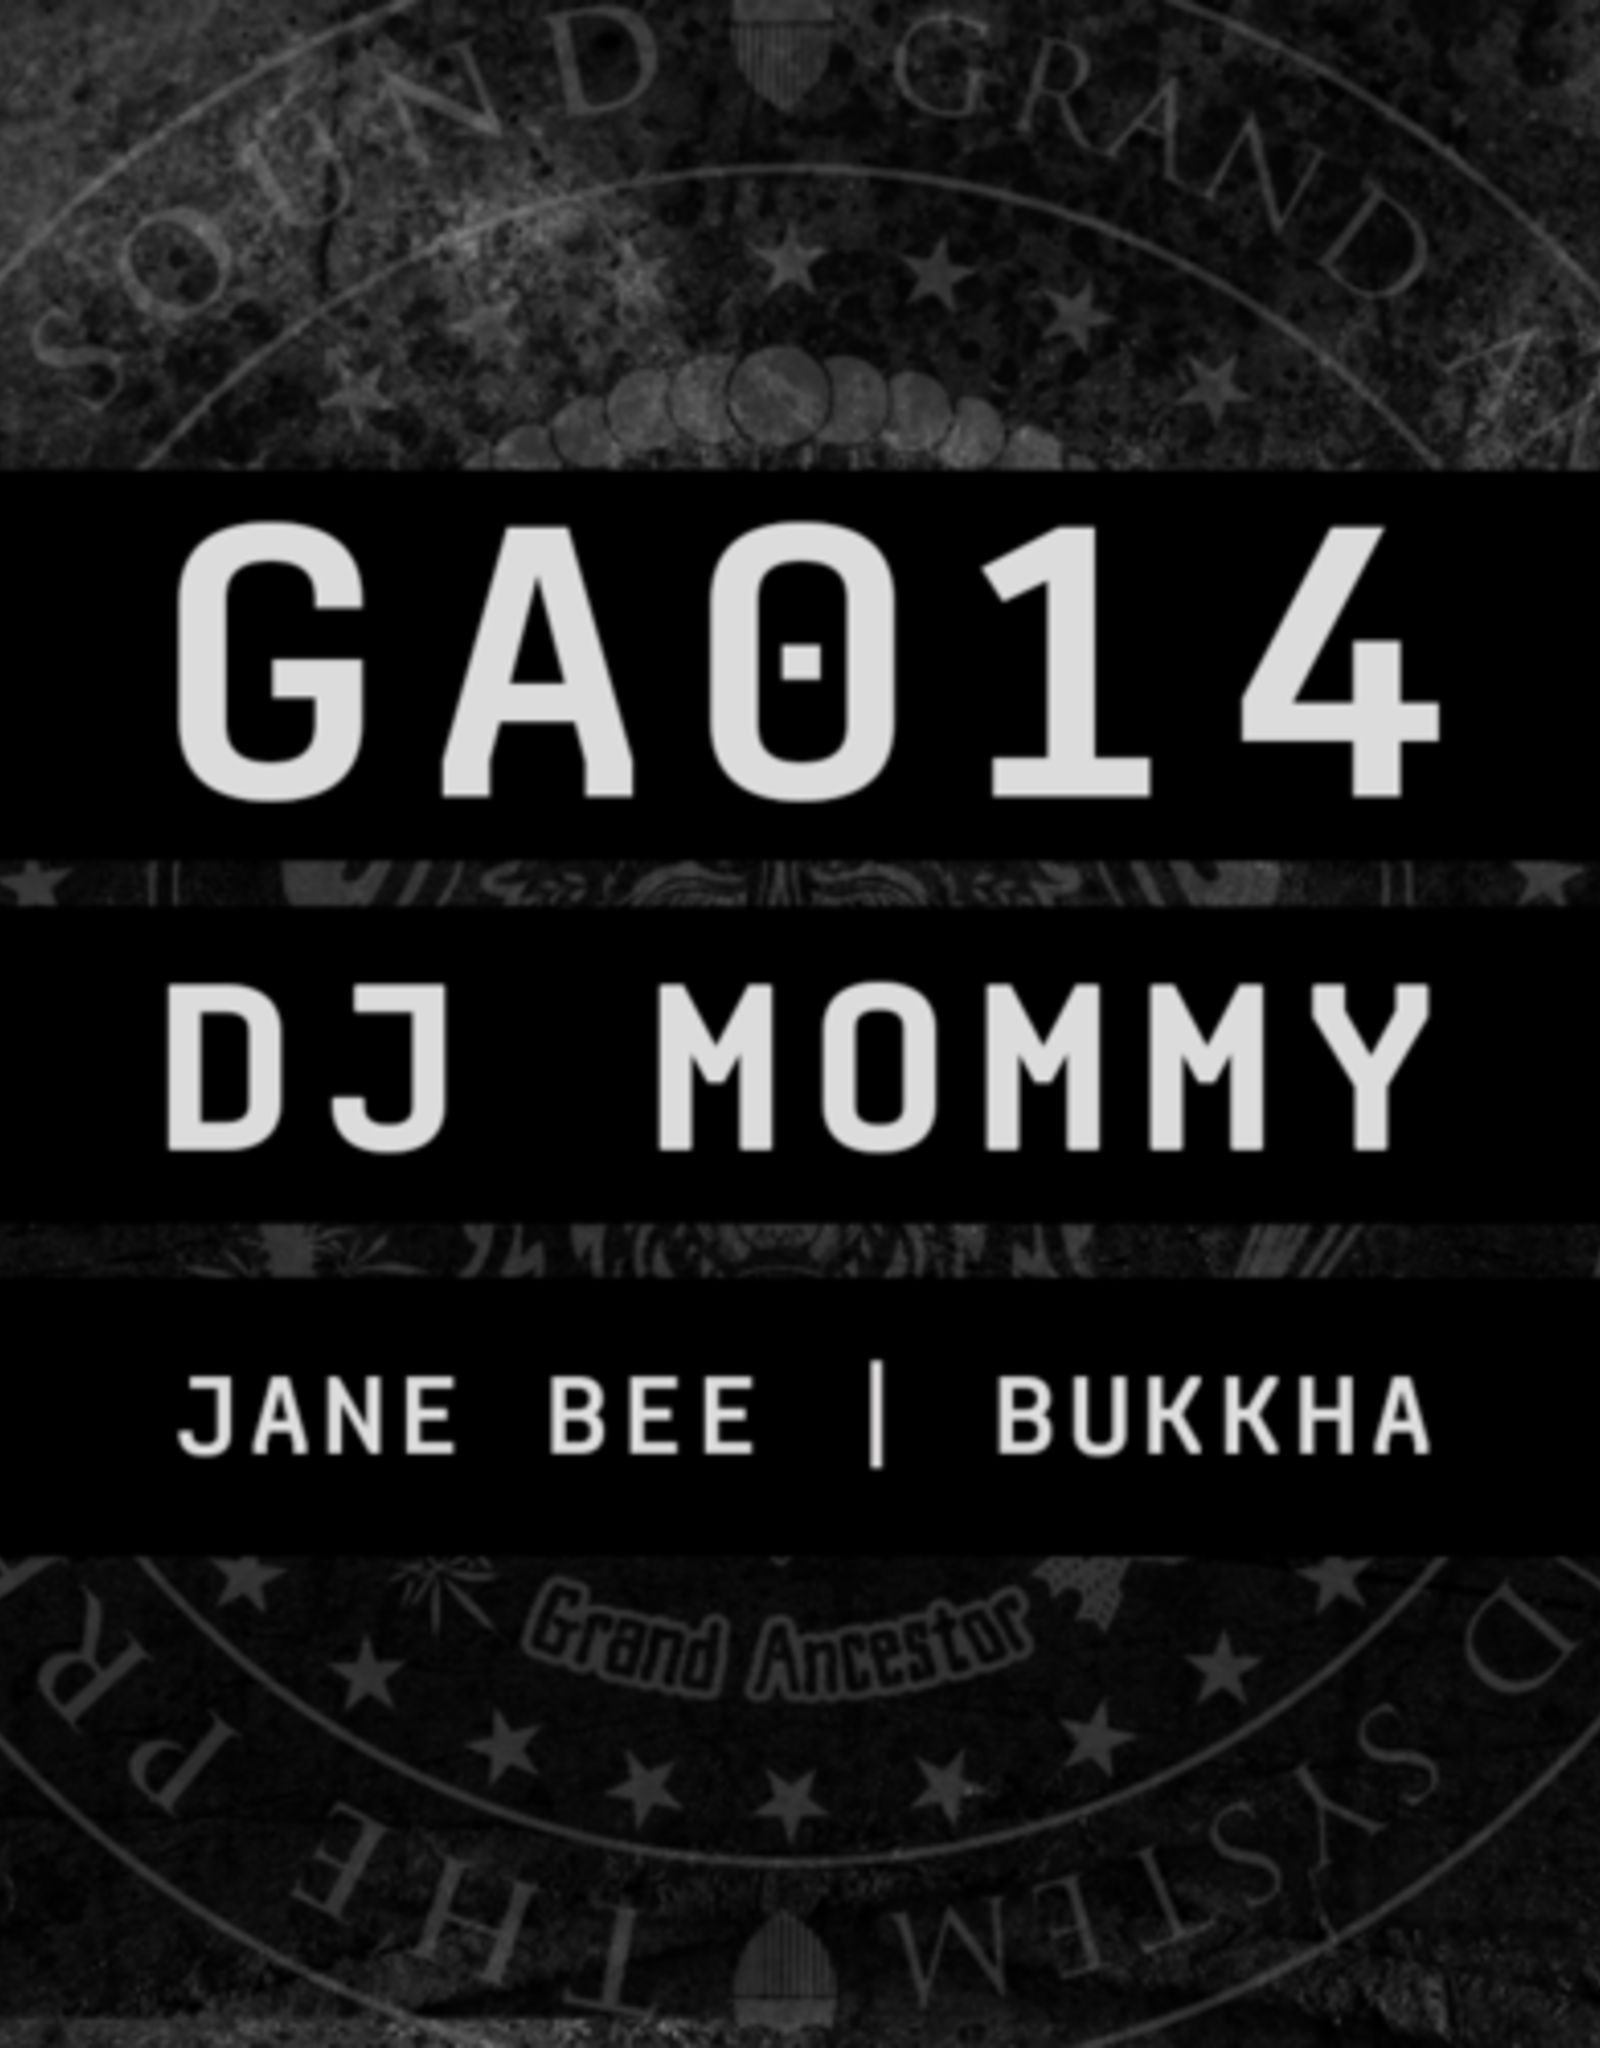 Jane Bee - DJ Mommy/Bukkha - Dub Mommy Grand Ancestor 7"